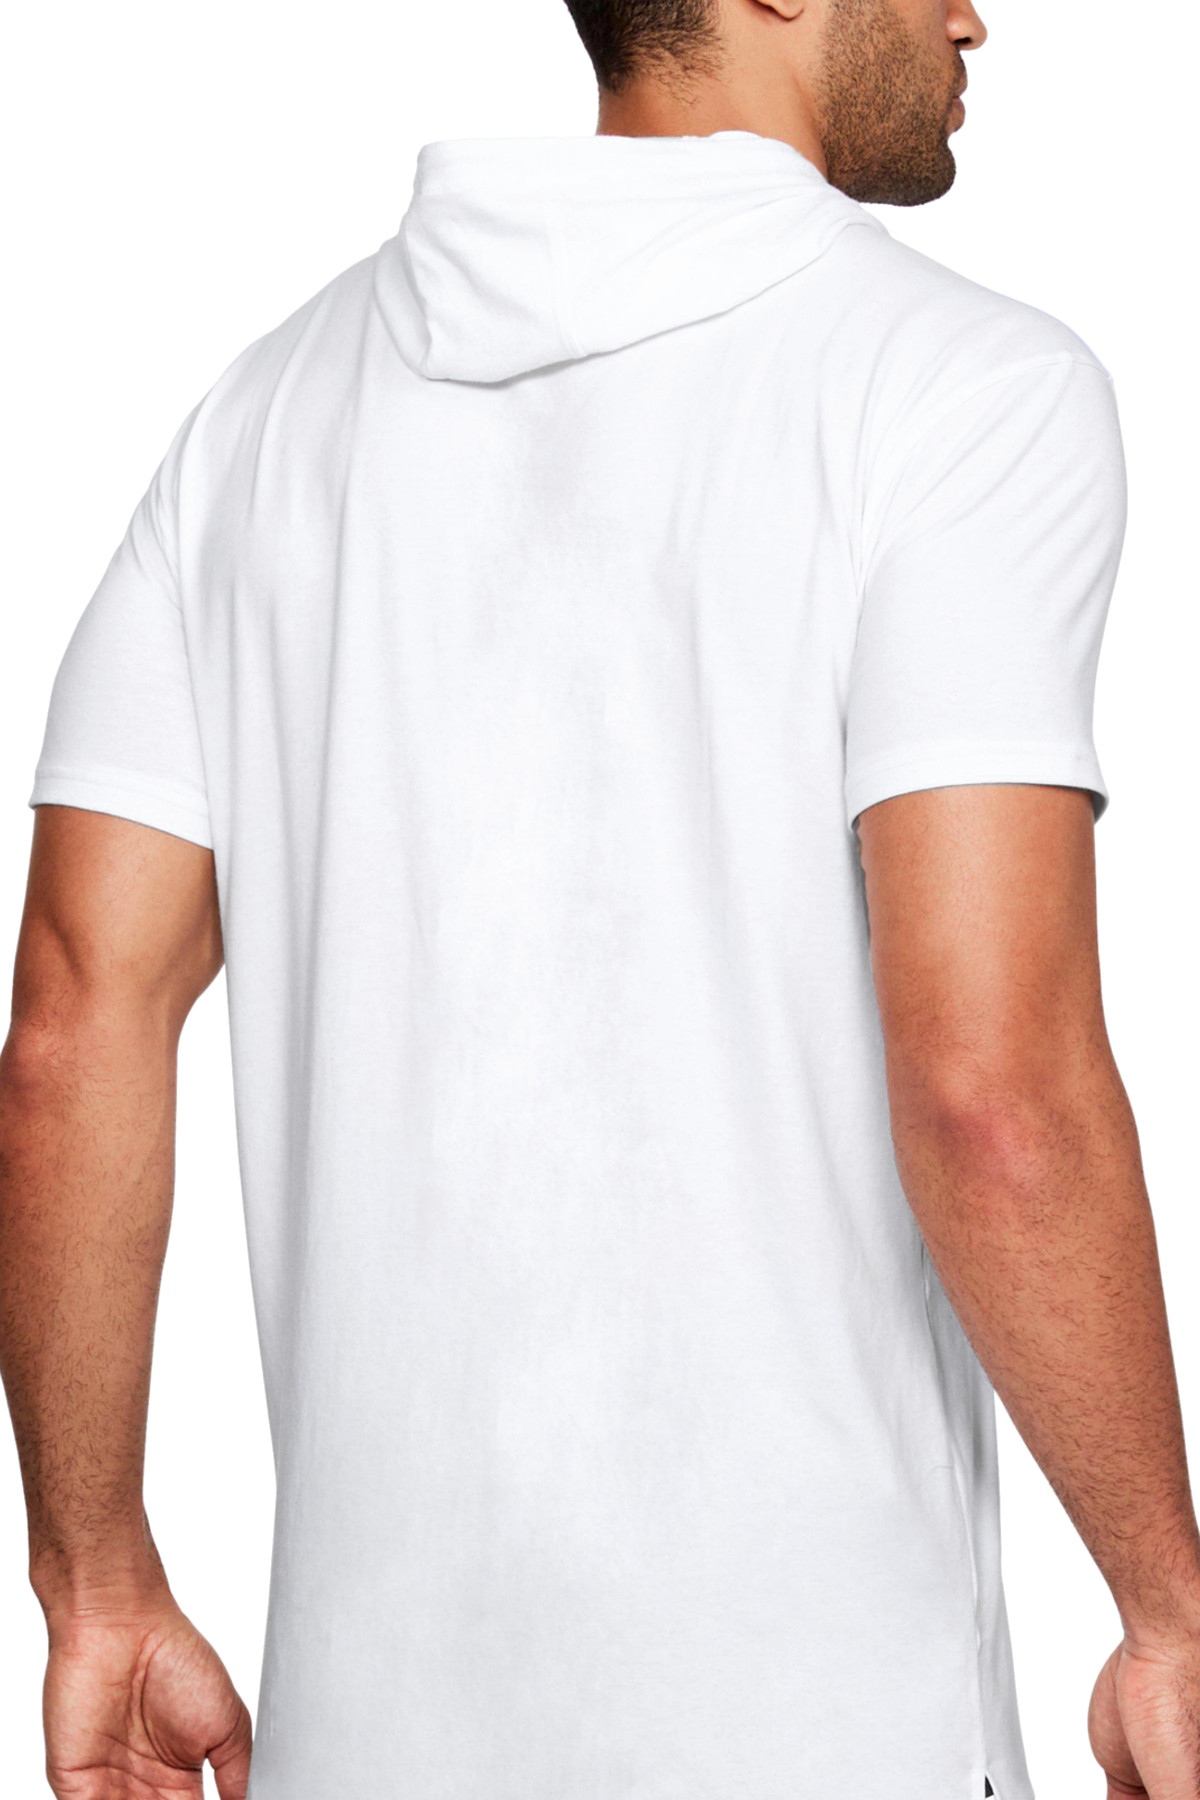 Uzun Dil Beyaz Kapşonlu Kısa Kollu Erkek T-shirt